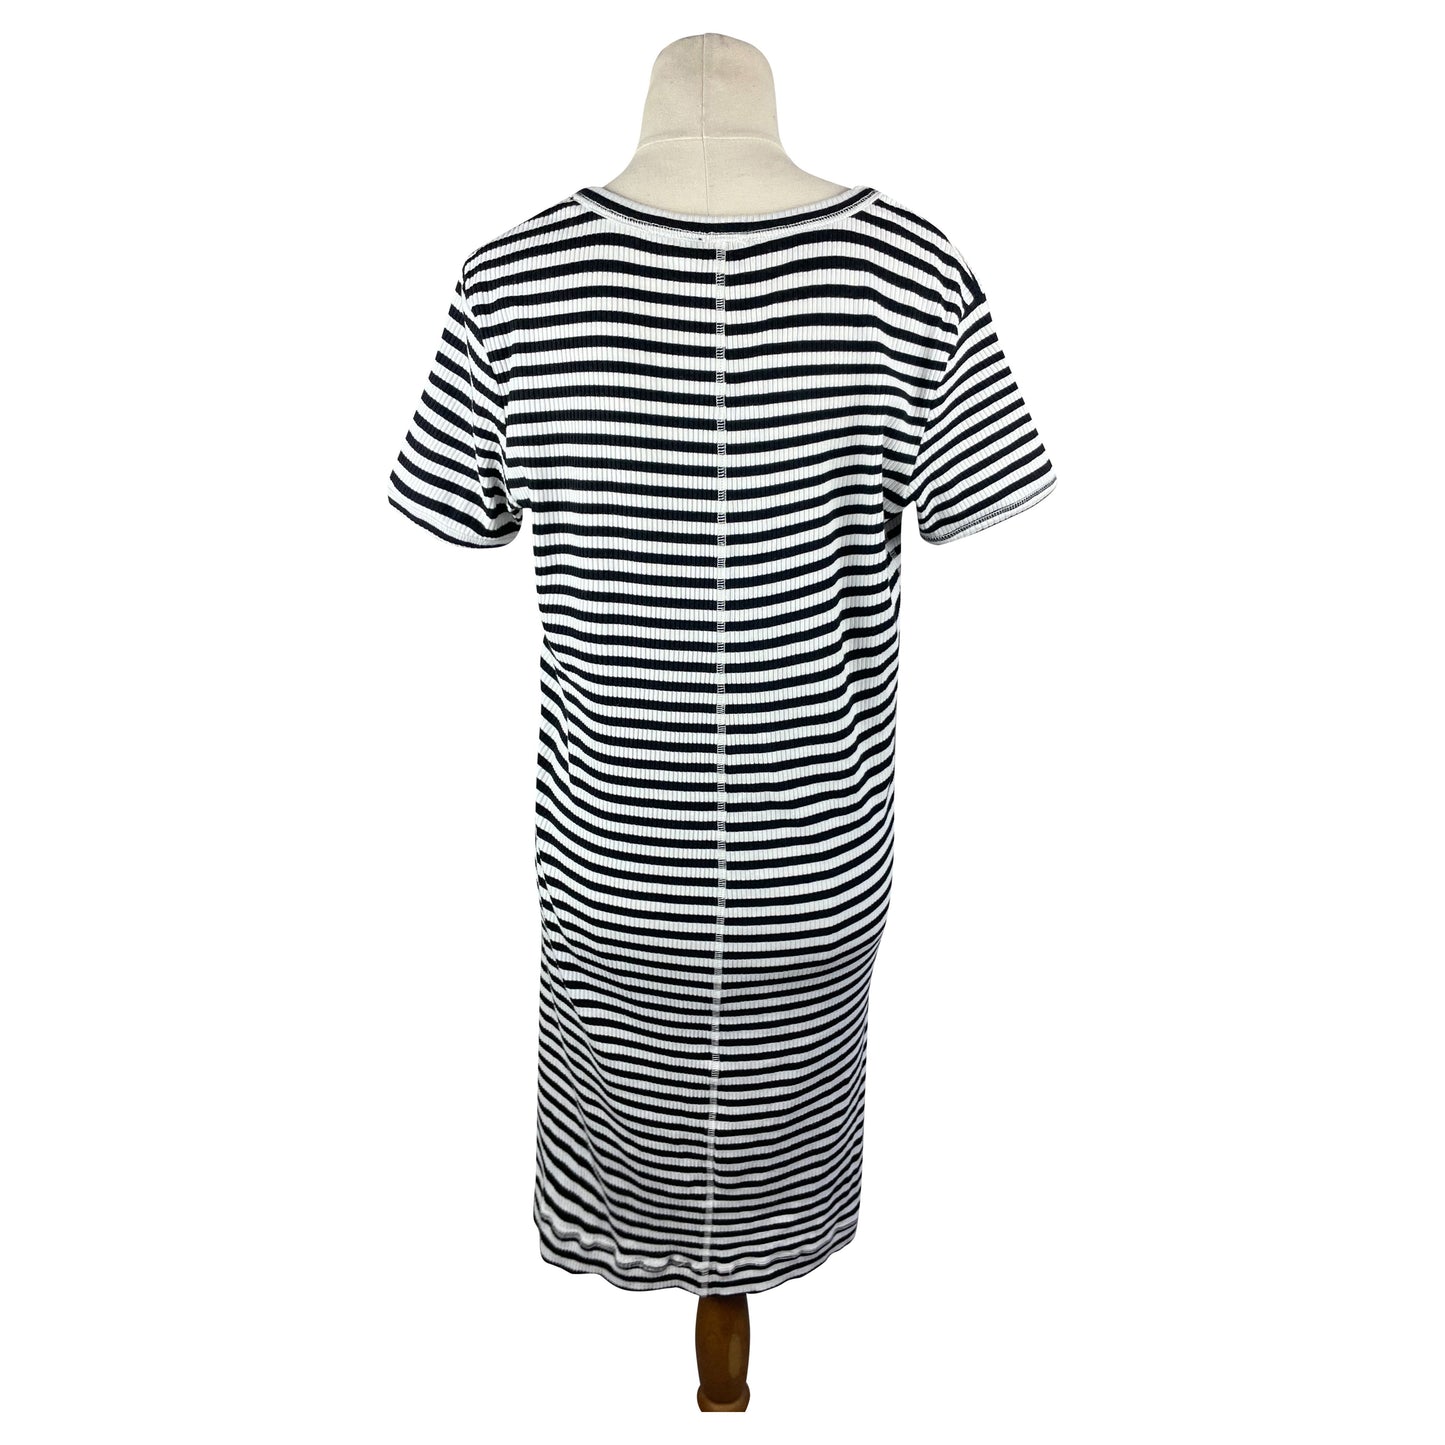 Storm white dress w black stripes | size 12